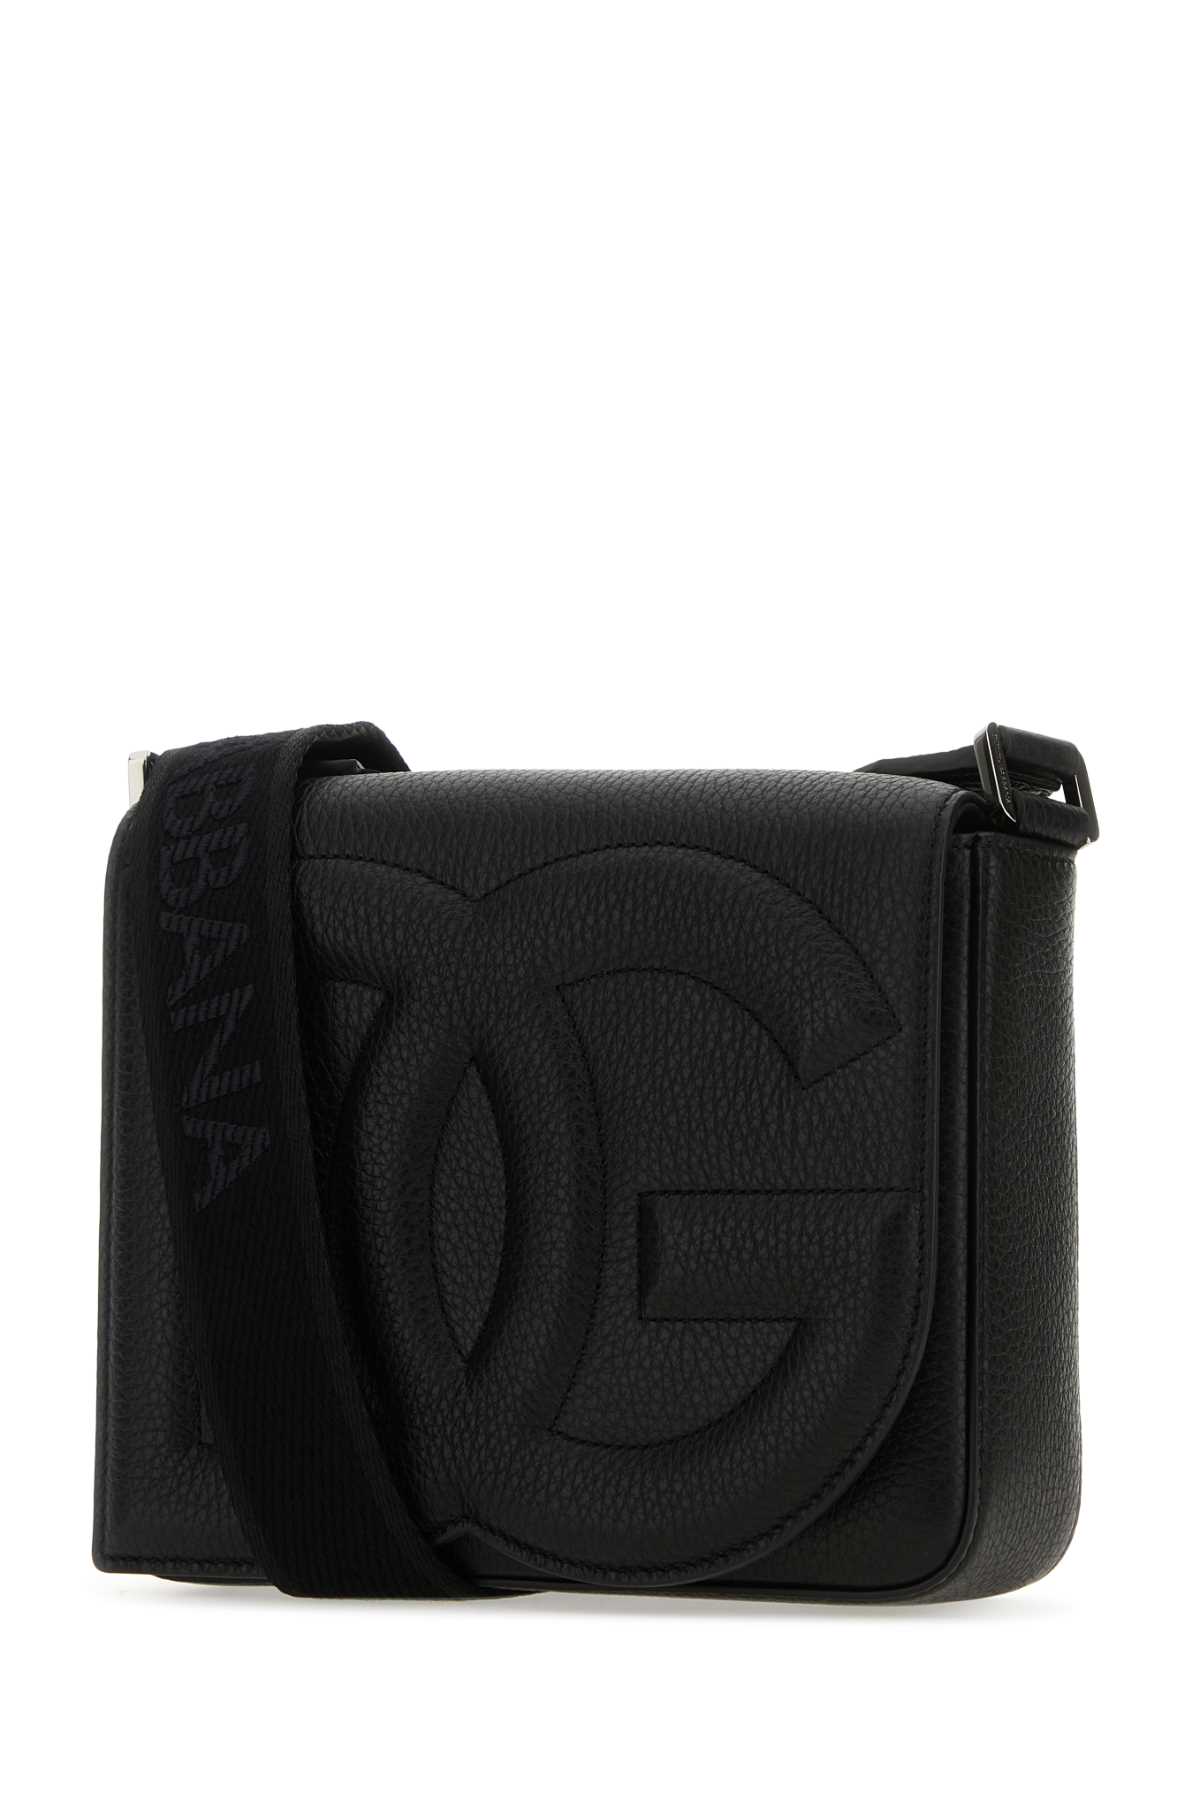 Dolce & Gabbana Black Leather Medium Dg Logo Bag Crossbody Bag In Nero